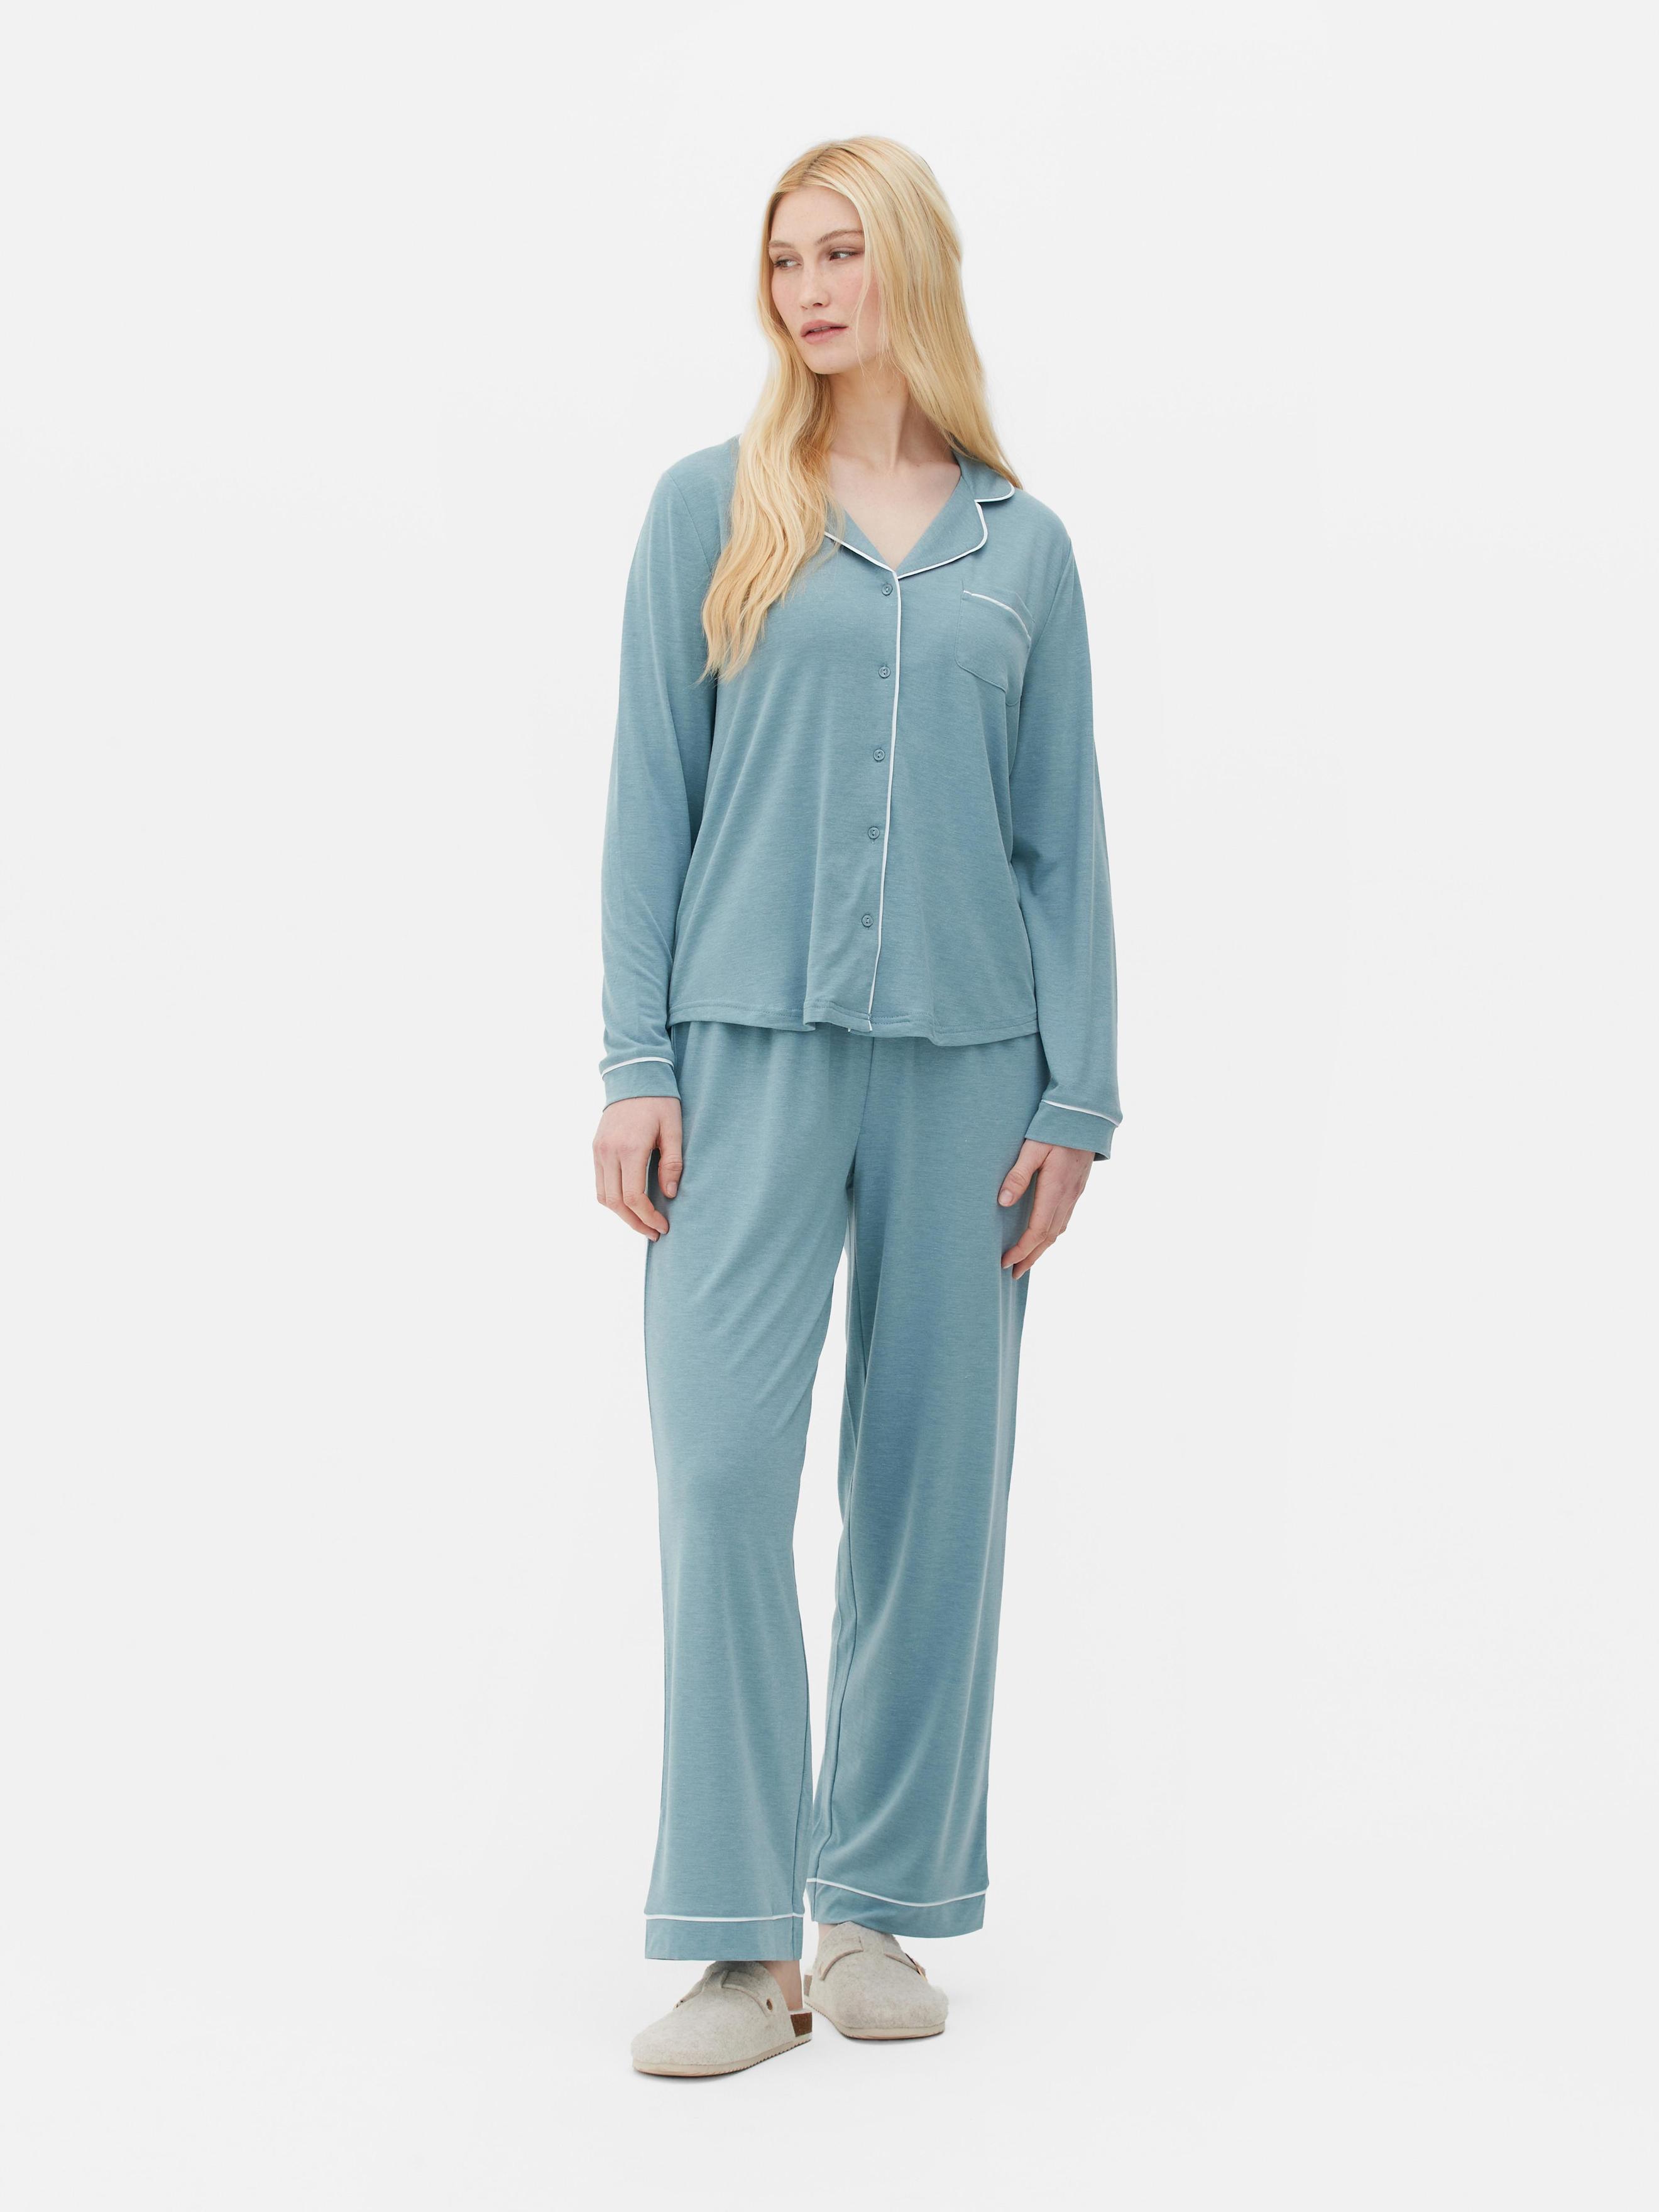 Pyjama boyfriend en jersey offre à 17€ sur Primark